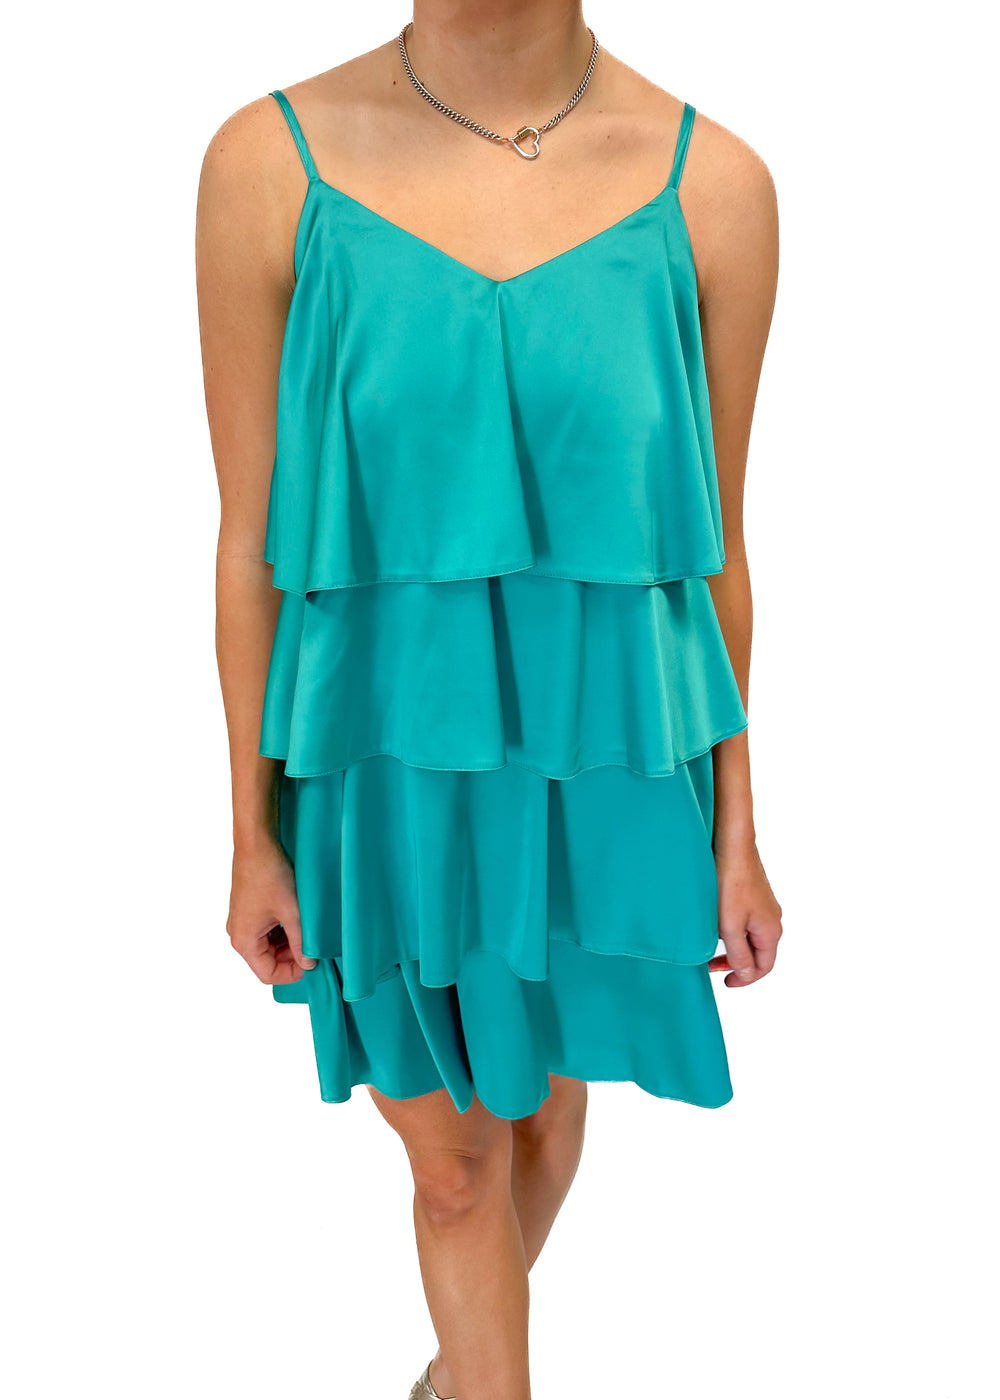 Molly Bracken Tiered Dress - Turquoise - Gabrielle's Biloxi